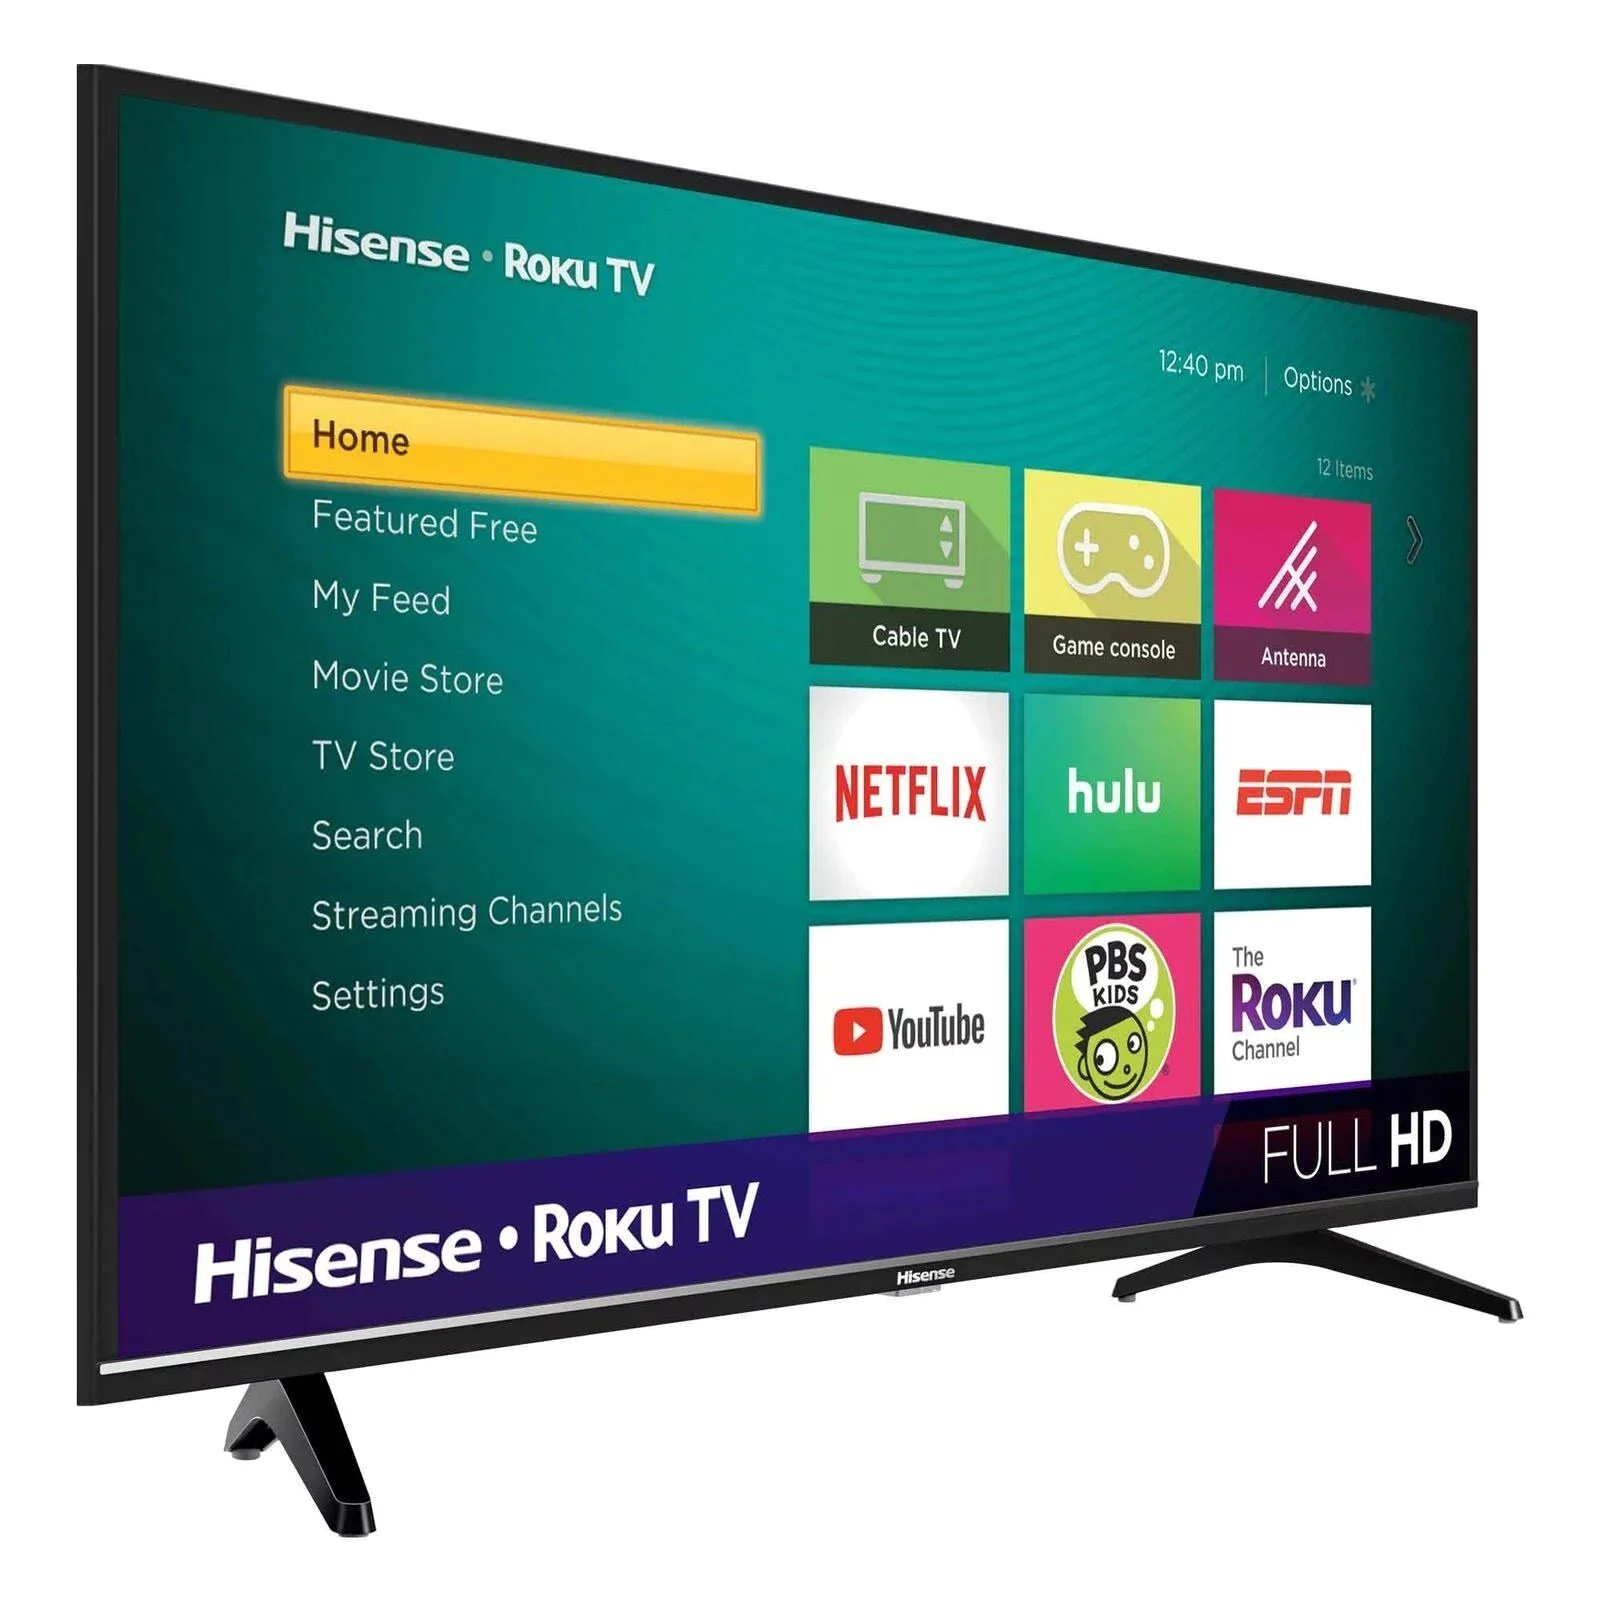 TV HISENSE 75" 4K UHD/ROKU SMART TV/Dolby Vision HDR+HDR10/Control Voz por App/Alexa/Siri/HeyGoogle - 75R6E4